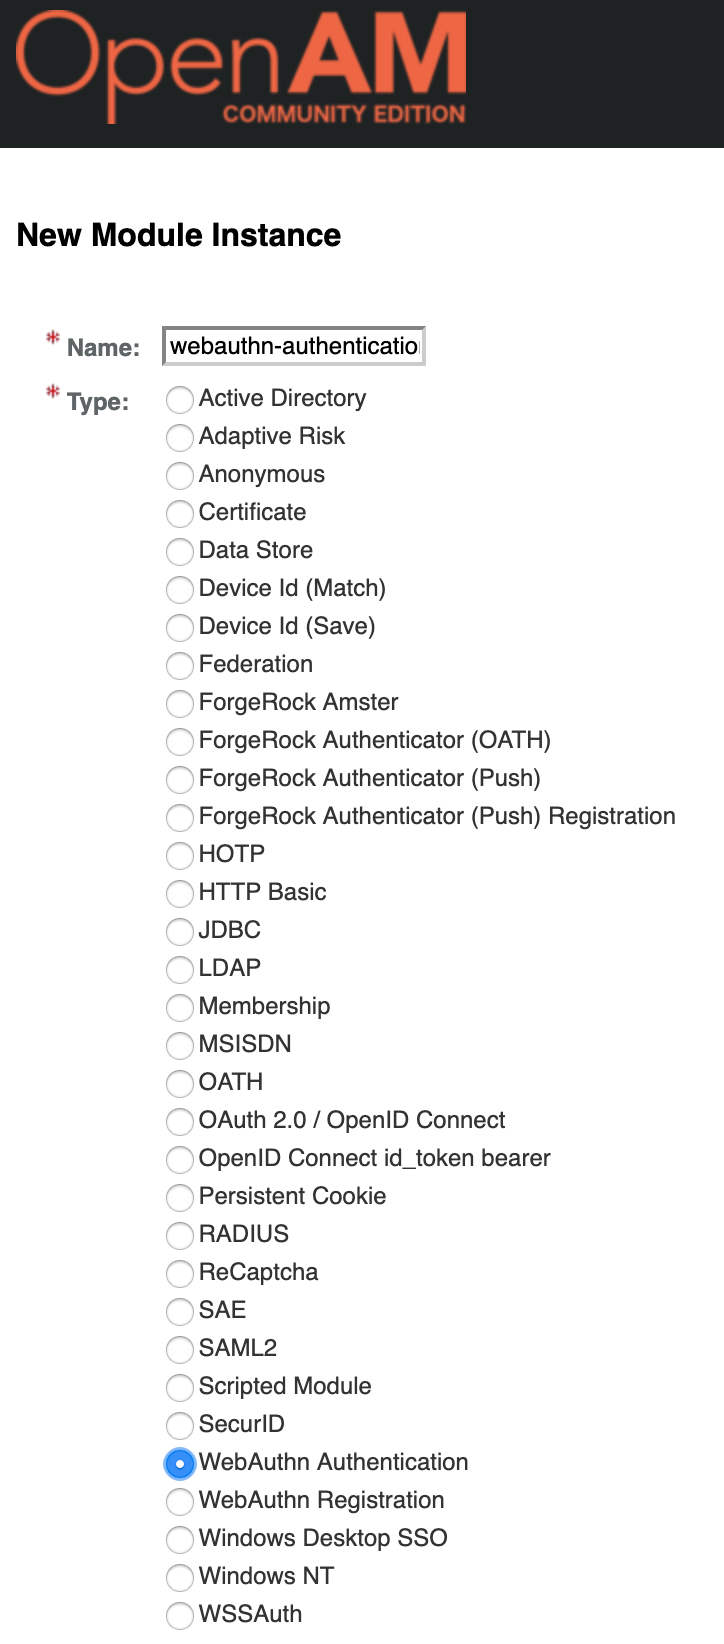 OpenAM Create WebAuthn Registration Authentication Module